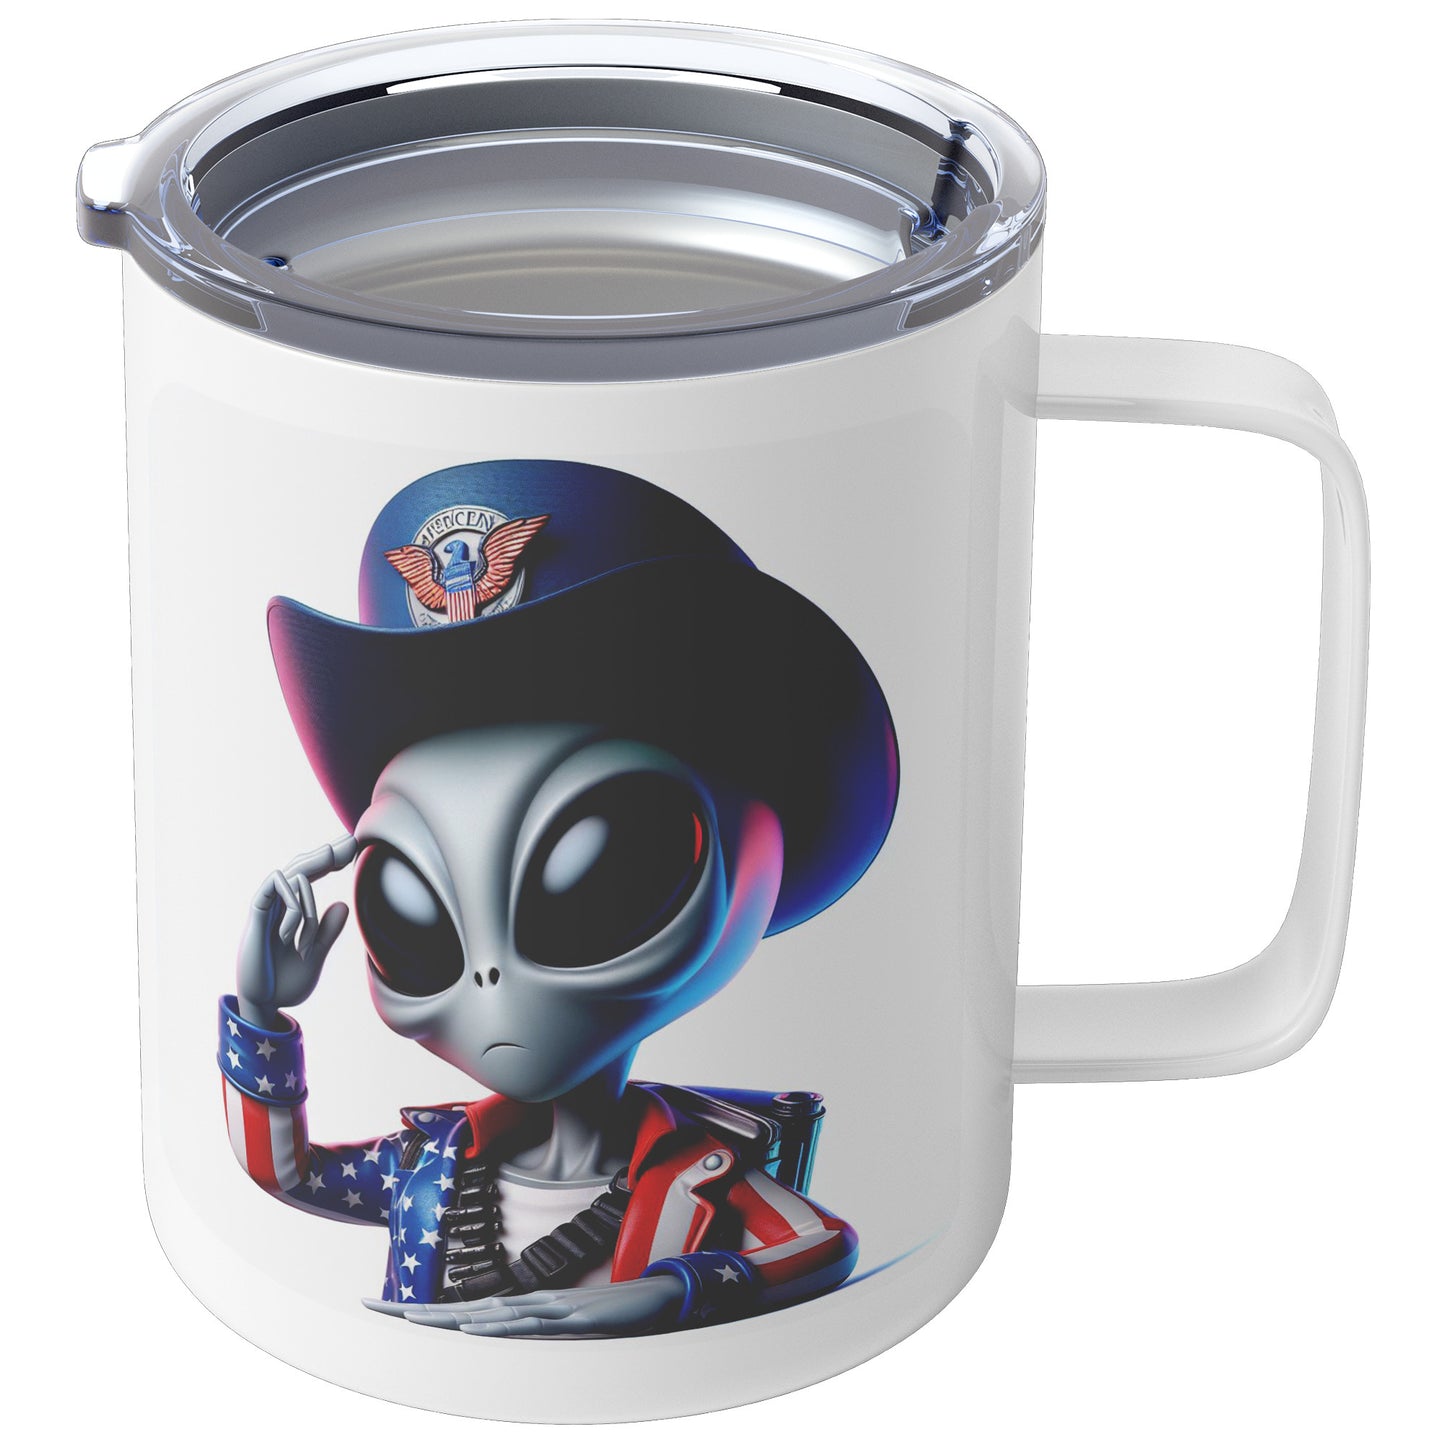 Nebulon the Grey Alien - Insulated Coffee Mug #10